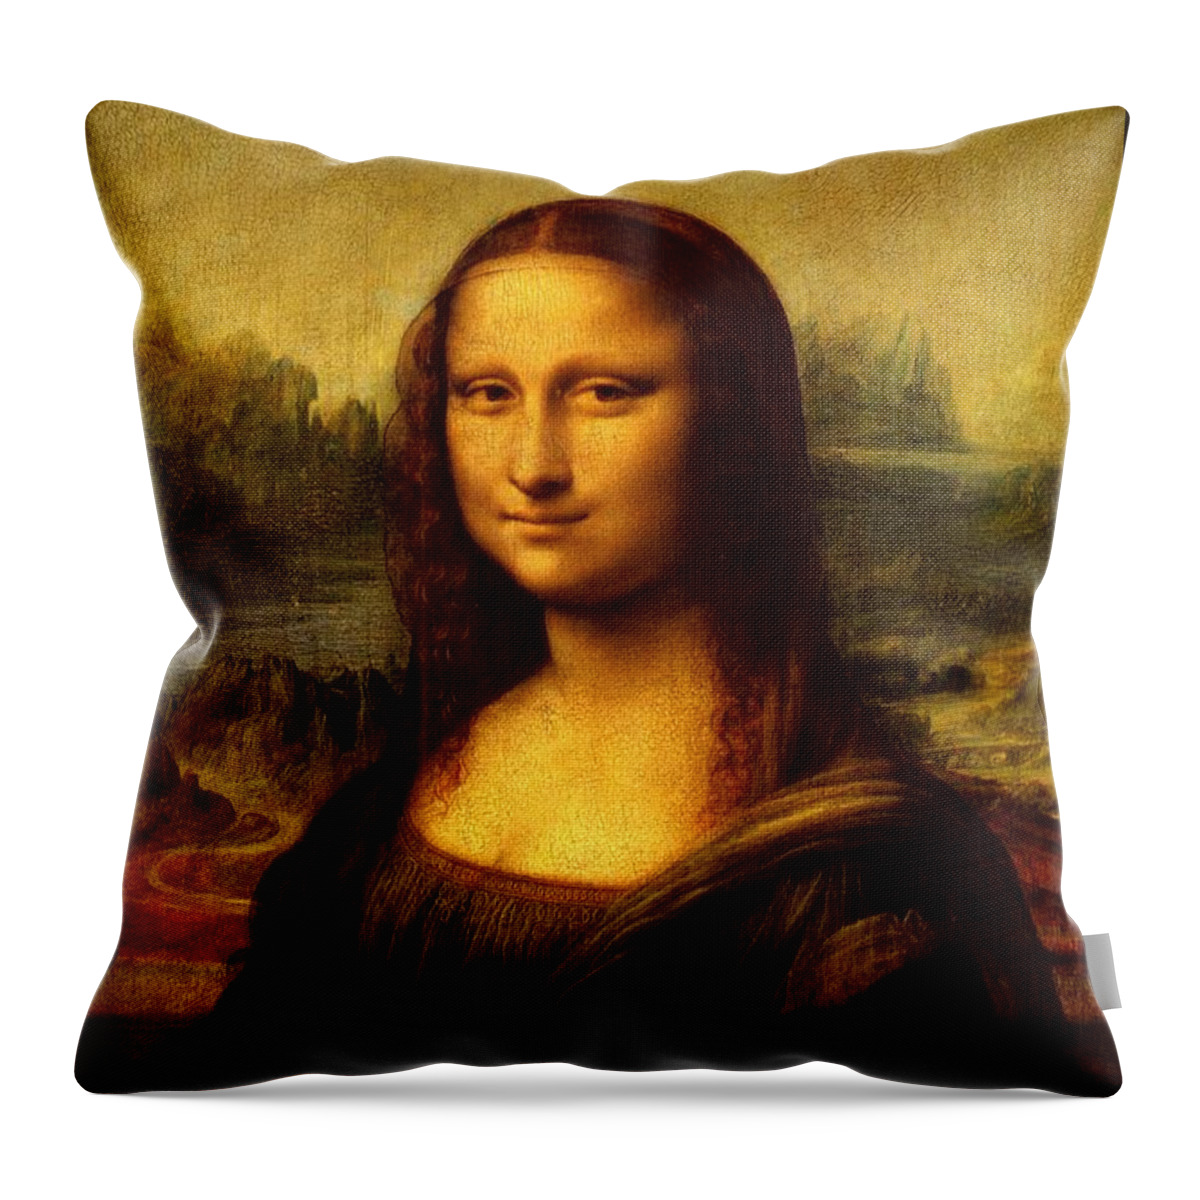 Leonardo Da Vinci Mona Lisa Throw Pillow featuring the painting Mona Lisa by Leonardo da Vinci